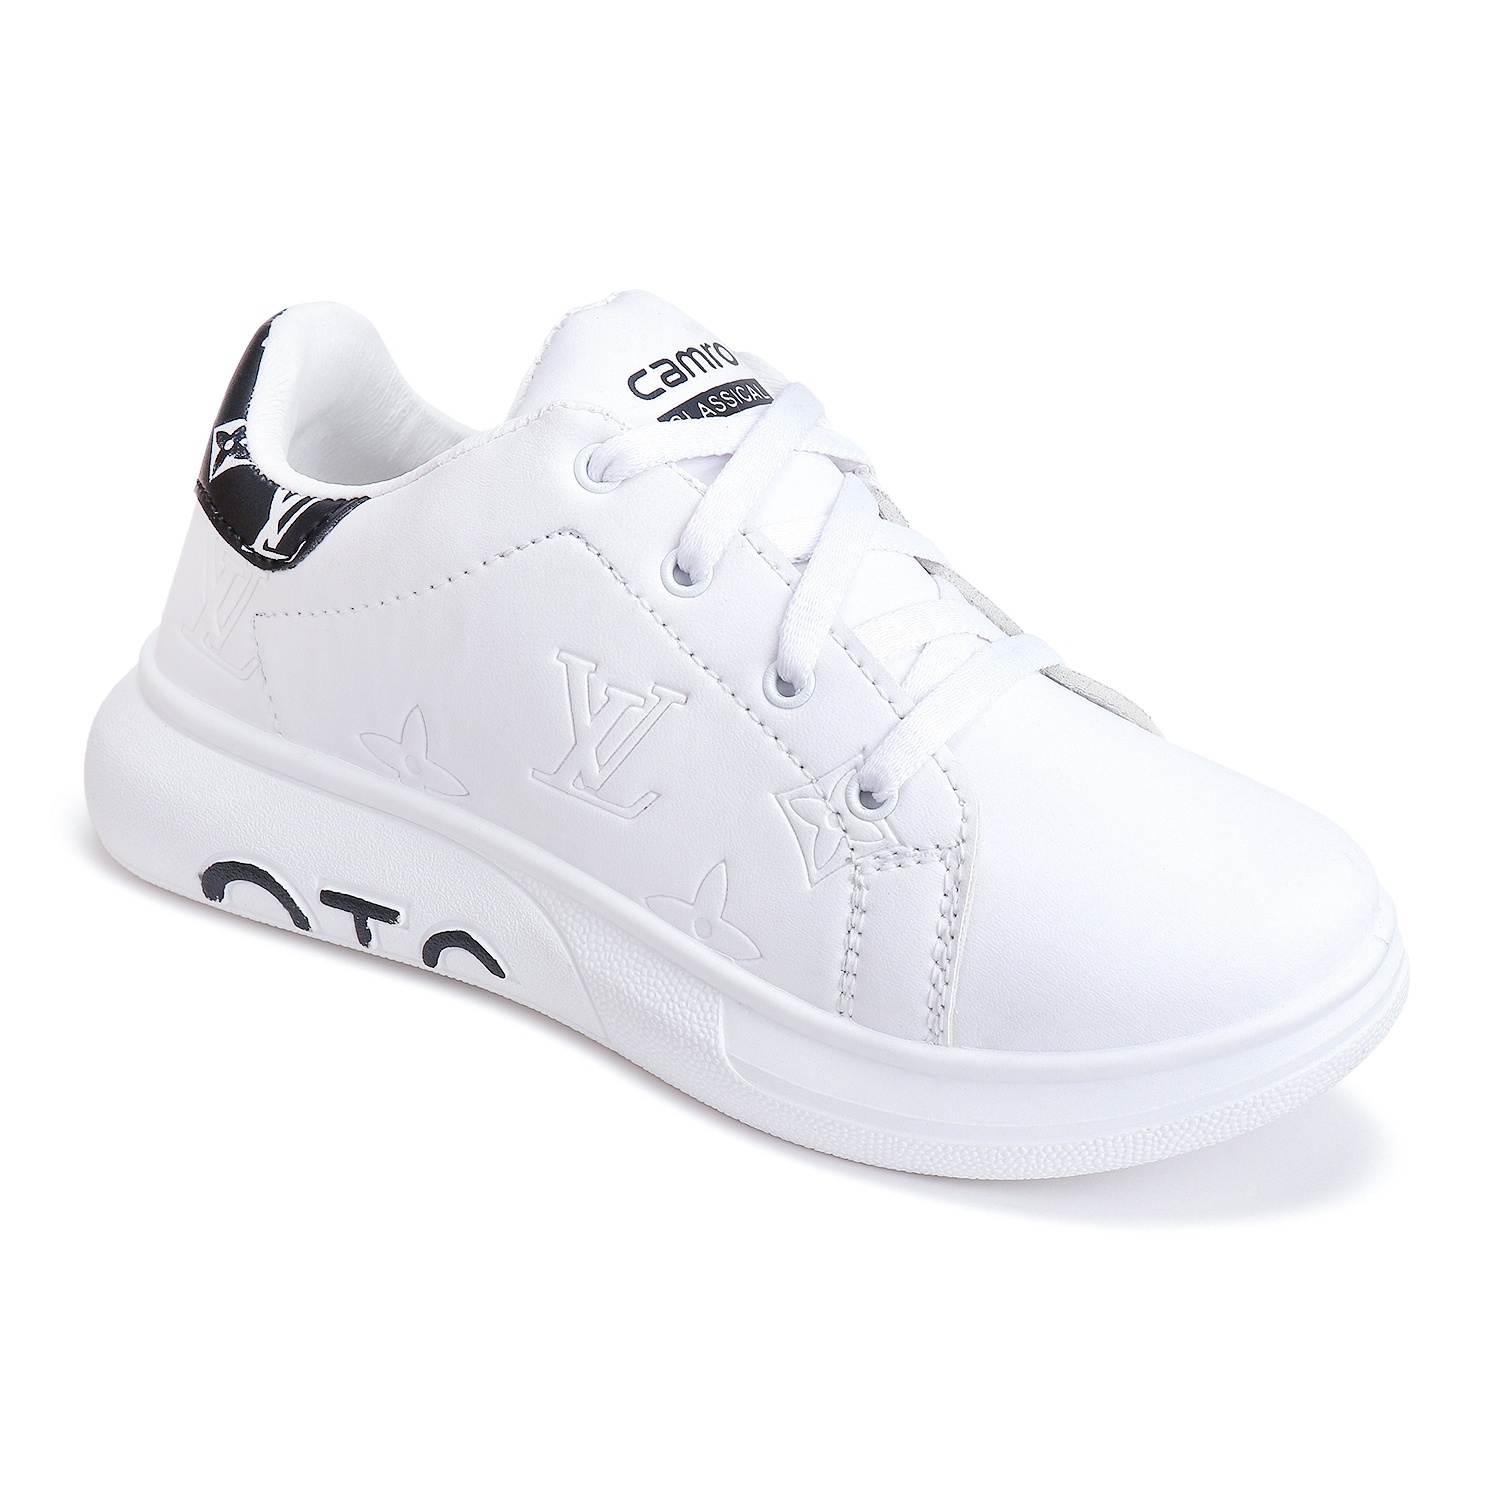 Camro OTC 2 White/Black Boys Running Shoe